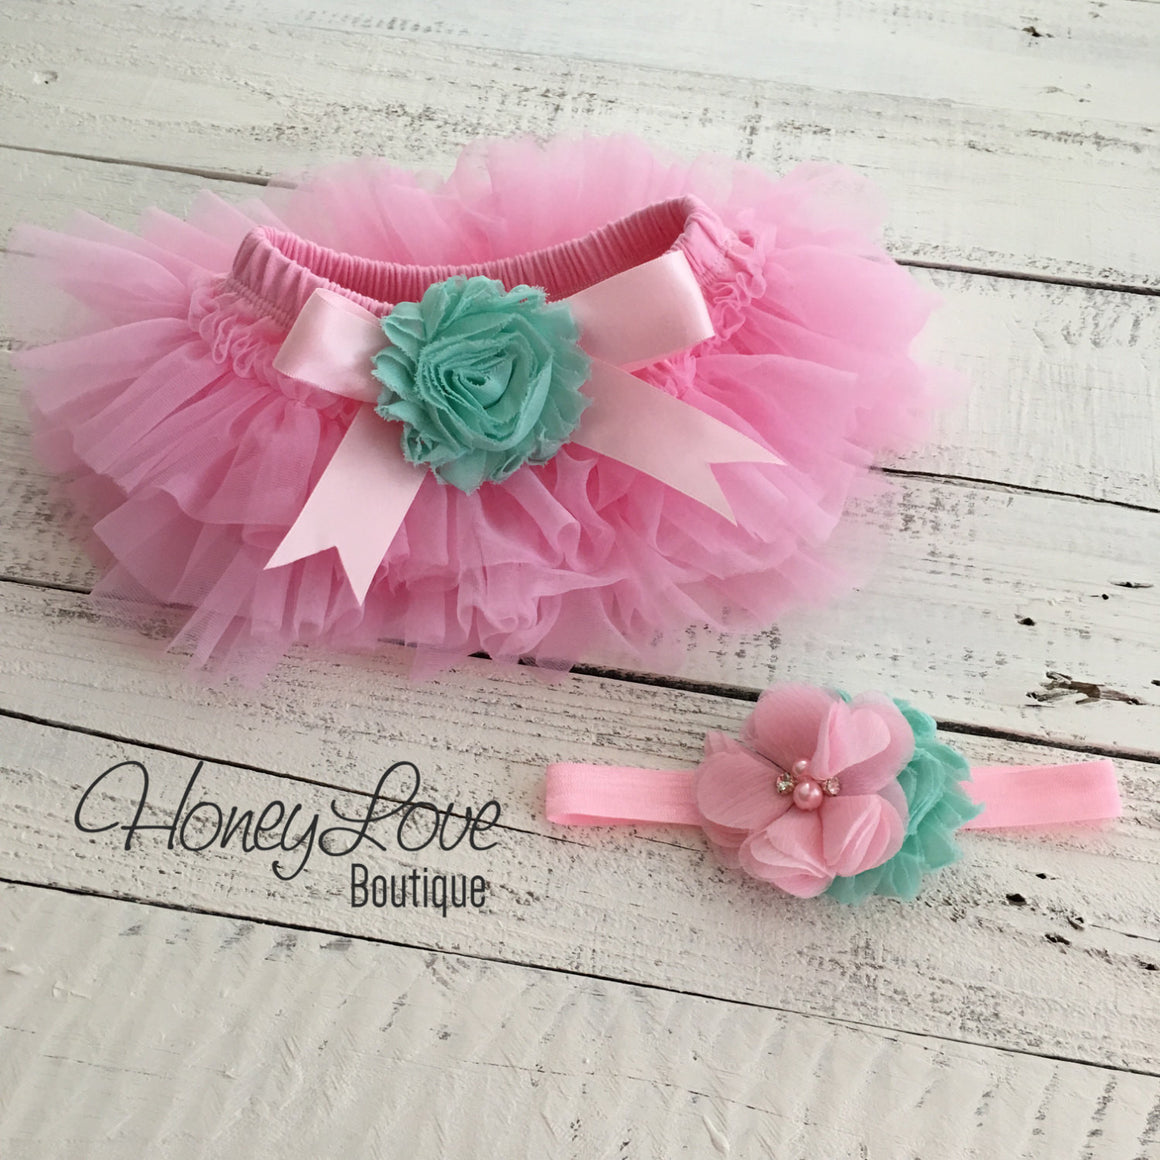 Light Pink and Mint/Aqua Embellished tutu skirt bloomers and headband - HoneyLoveBoutique